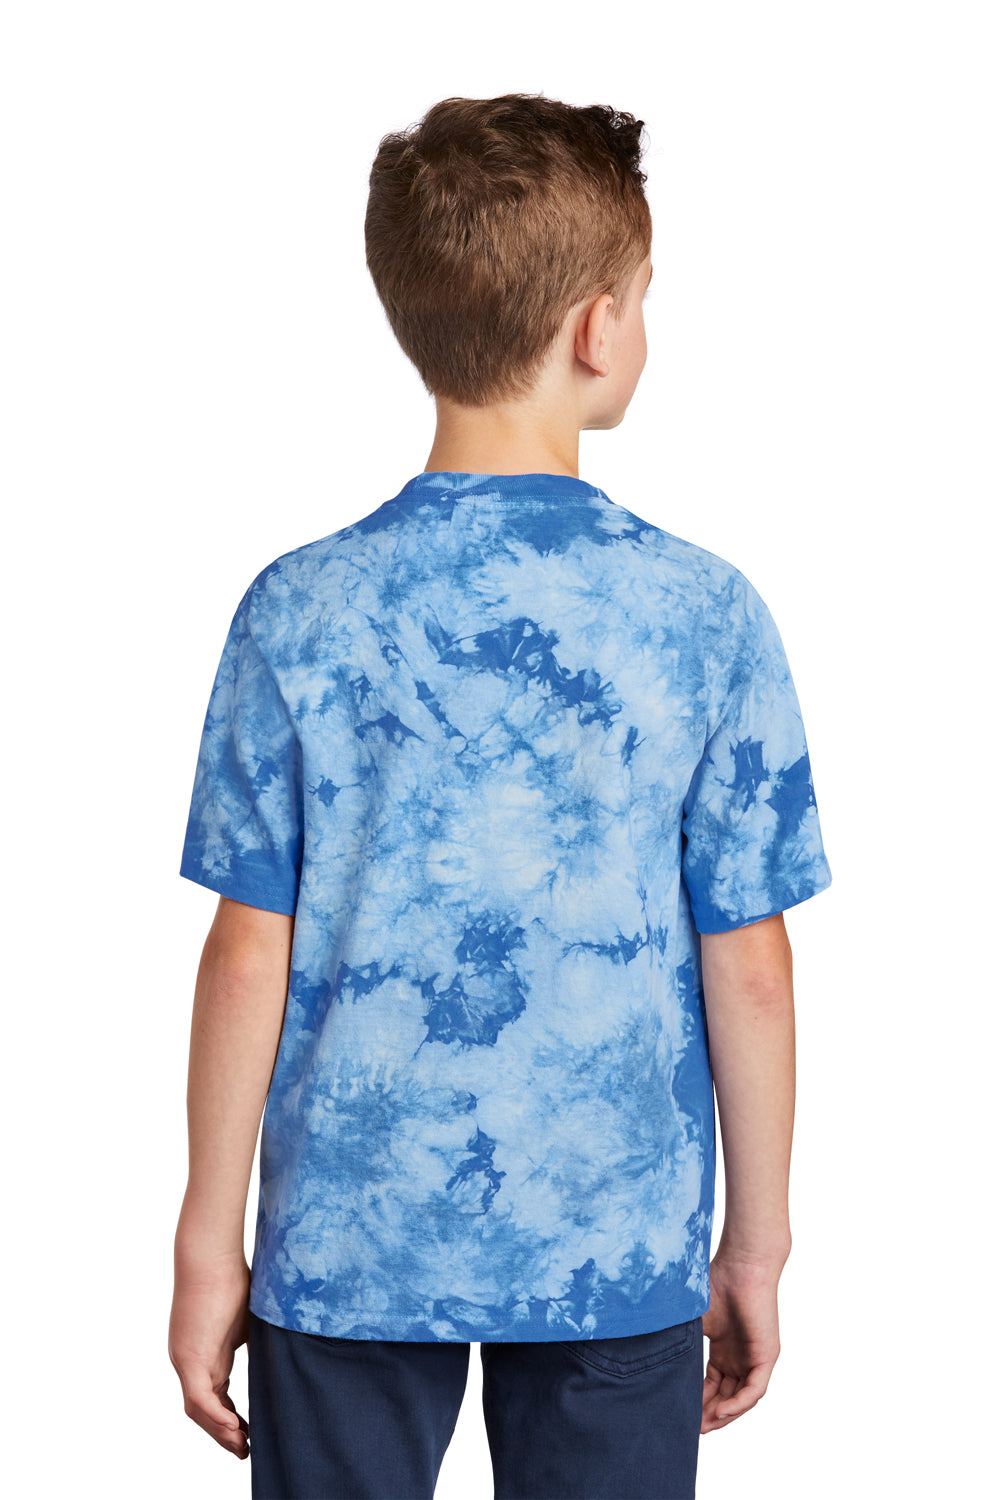 Port & Company Youth Crystal Tie-Dye Short Sleeve Crewneck T-Shirt Sky Blue Side